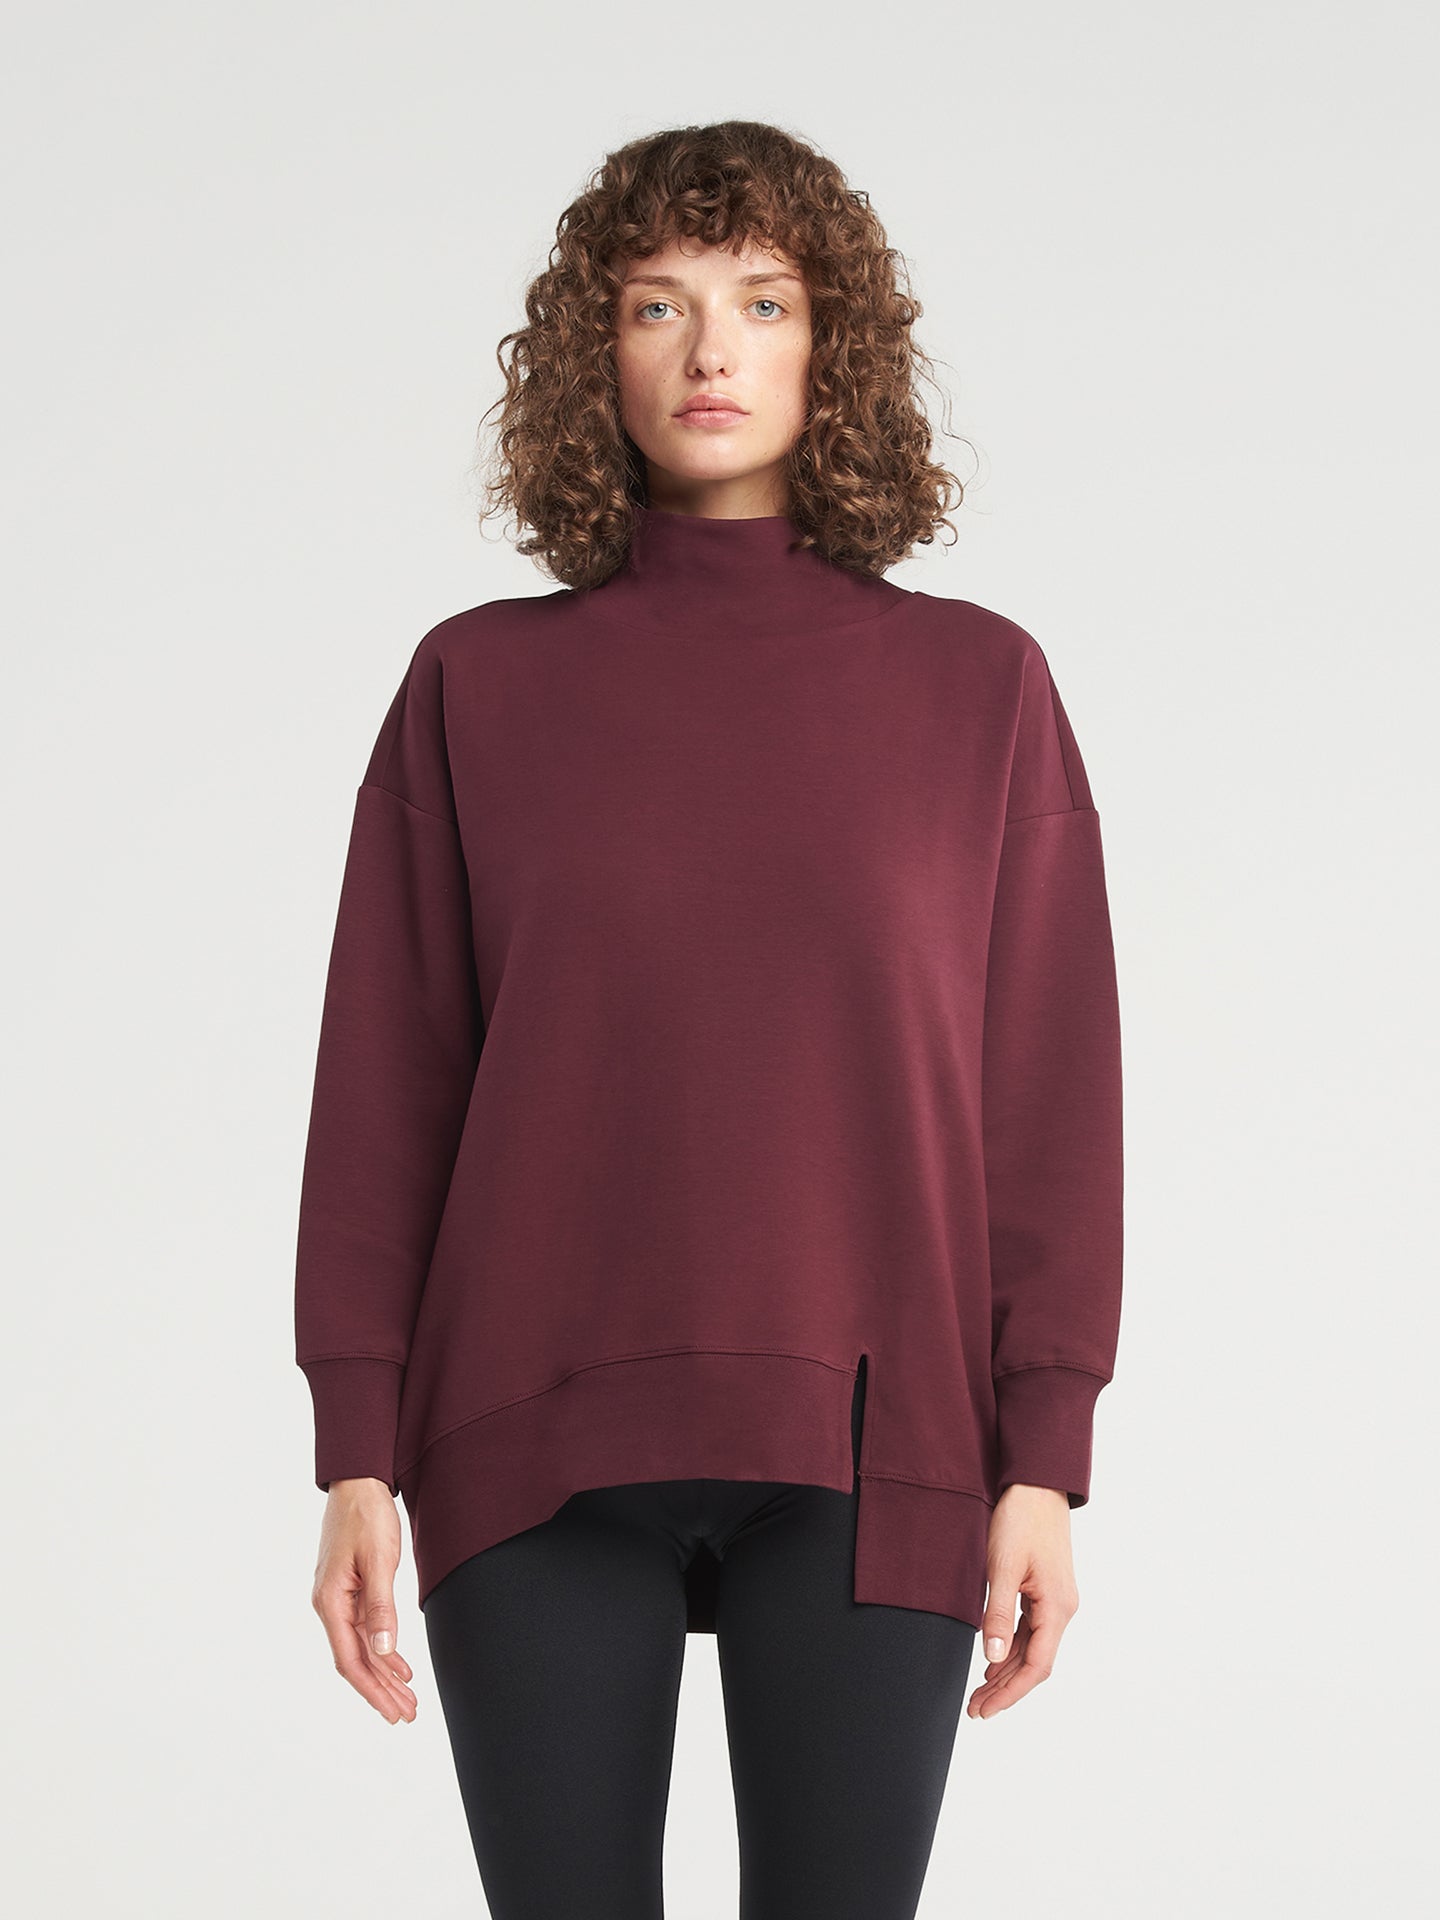 Sweater Top Long Sleeves